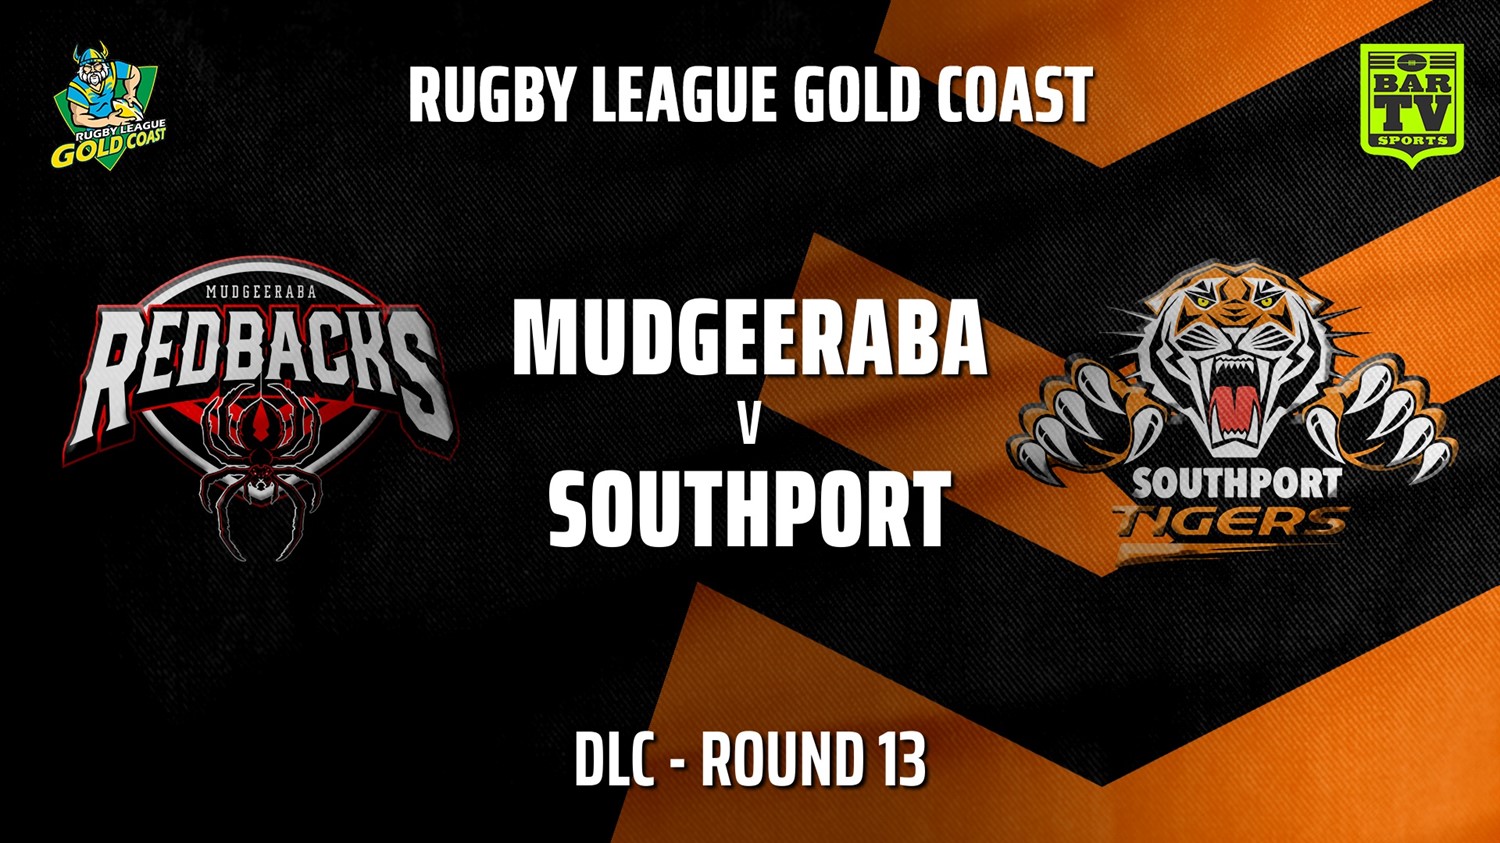 210912-Gold Coast Round 13 - DLC - Mudgeeraba Redbacks v Southport Tigers Minigame Slate Image